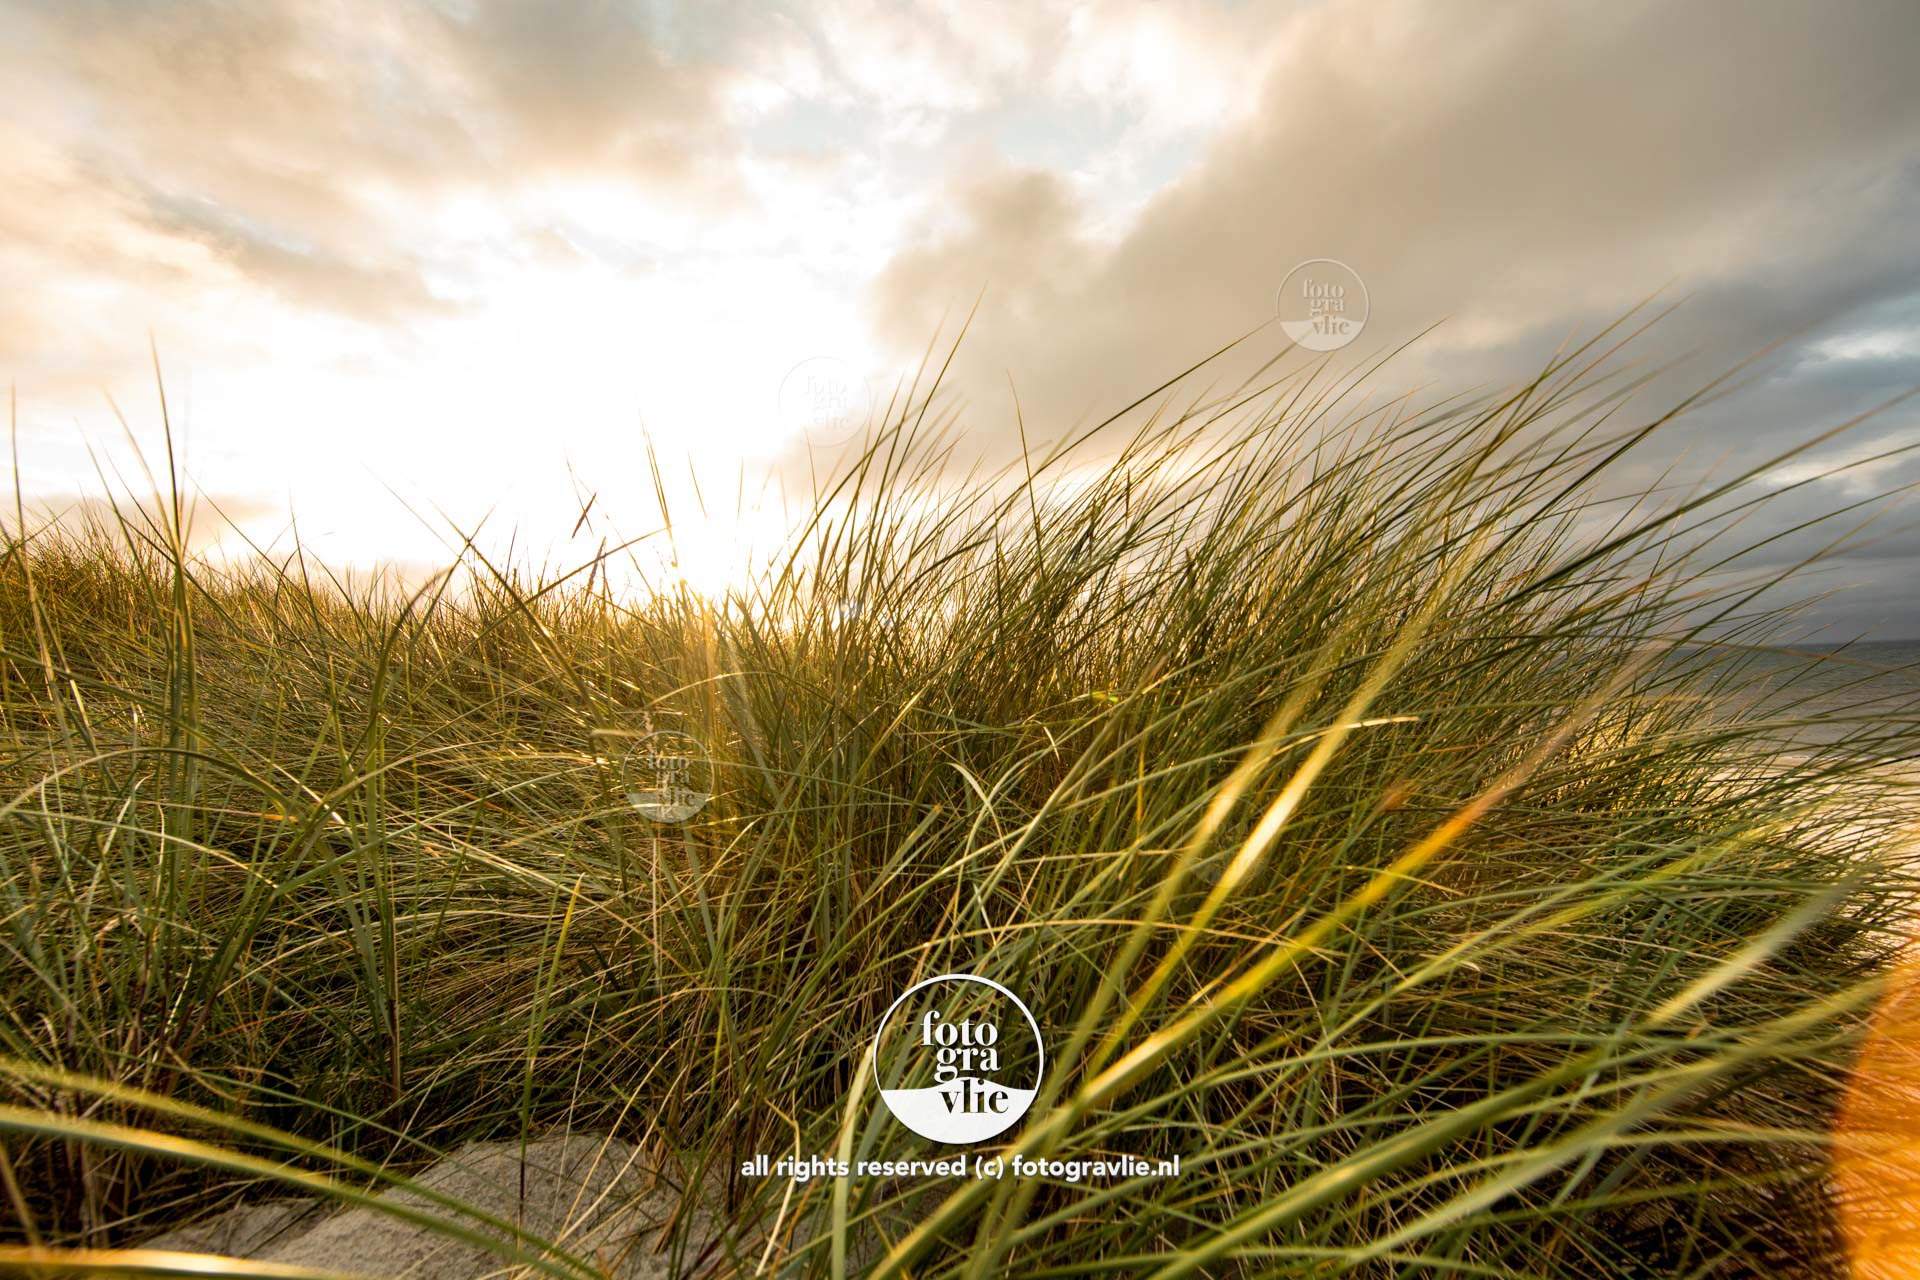 duin duinen Vlieland foto - fotograaf vlieland - portfolio fotogravlie